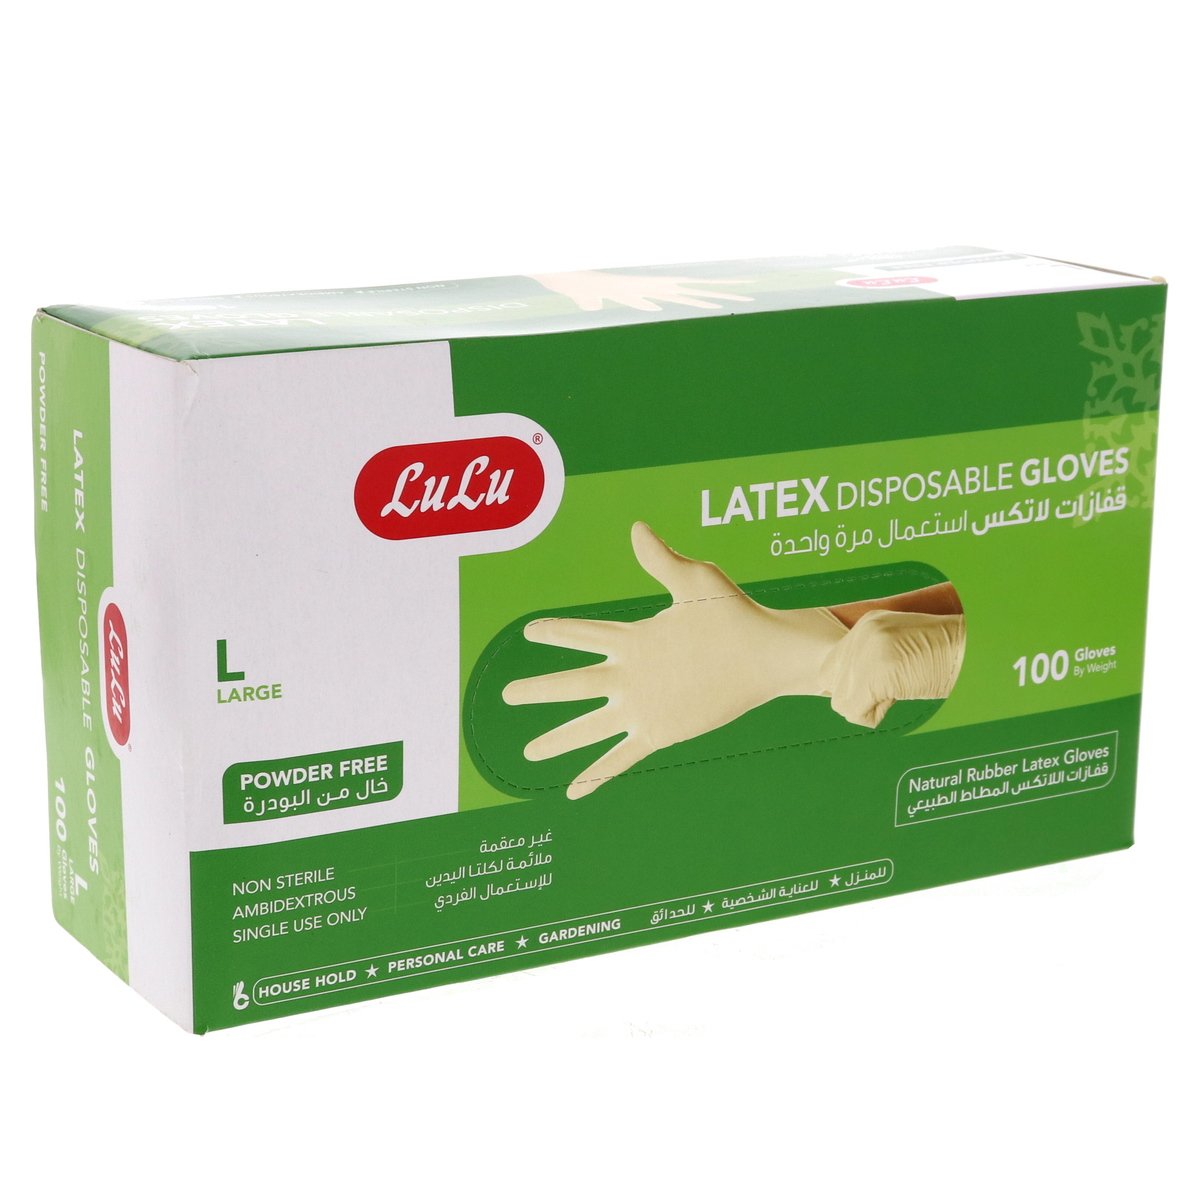 LuLu Latex Disposable Gloves Powder Free Large 100pcs